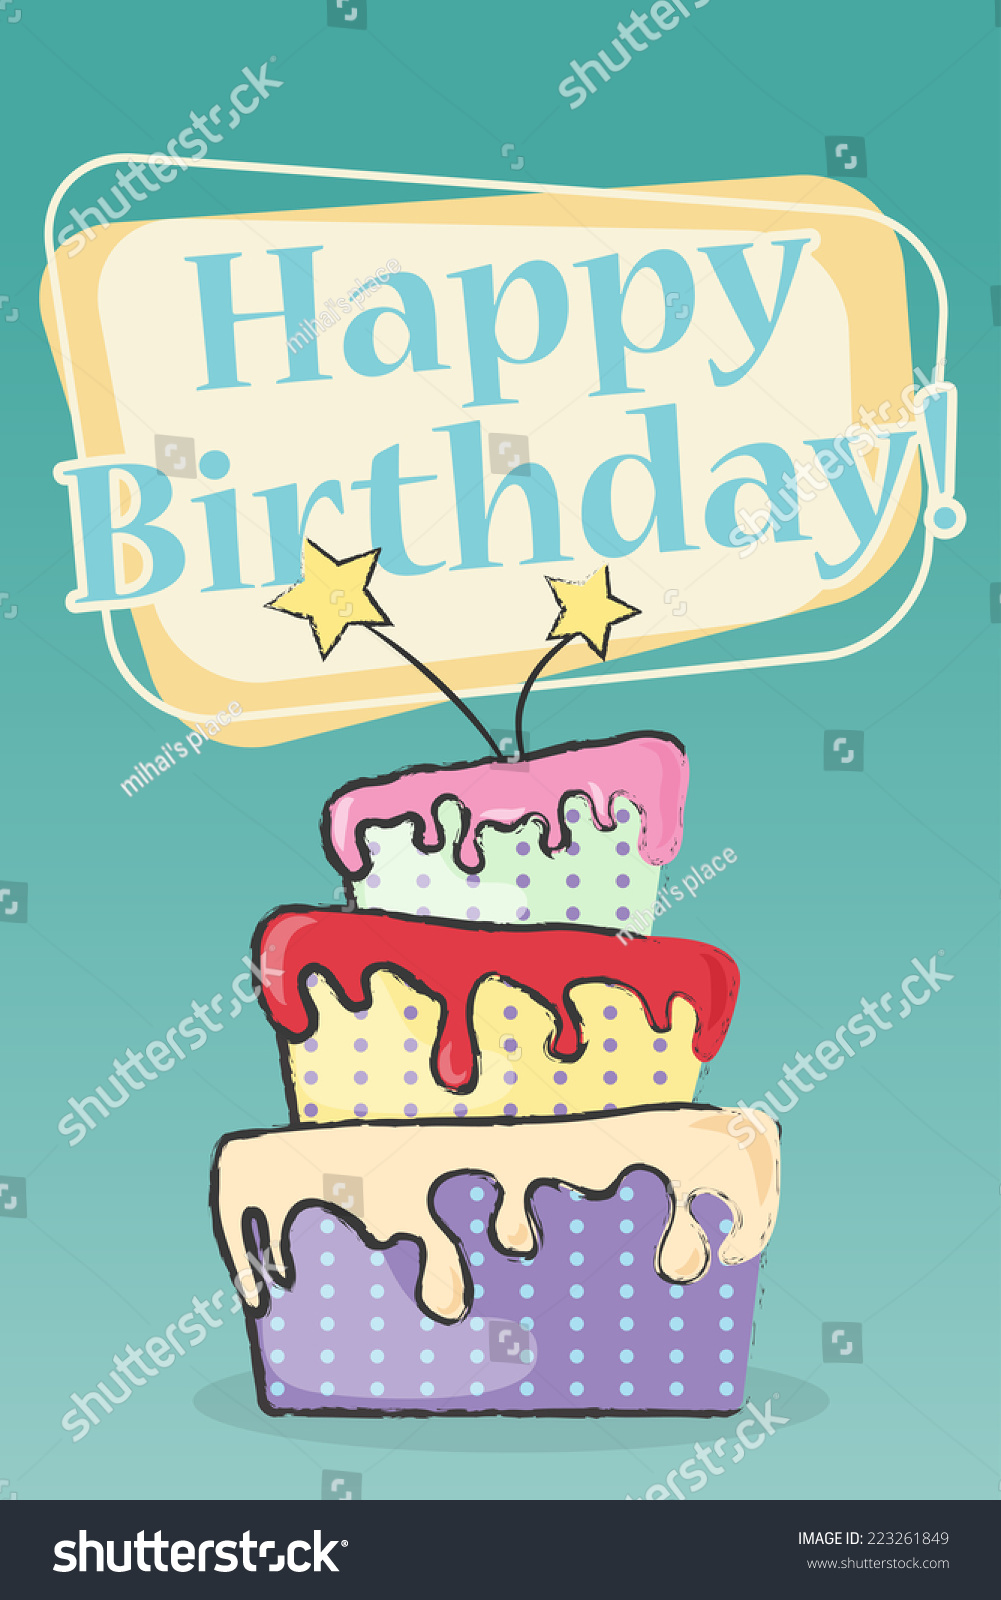 Happy Birthday Greeting Card, Illustration Vector Format - 223261849 ...